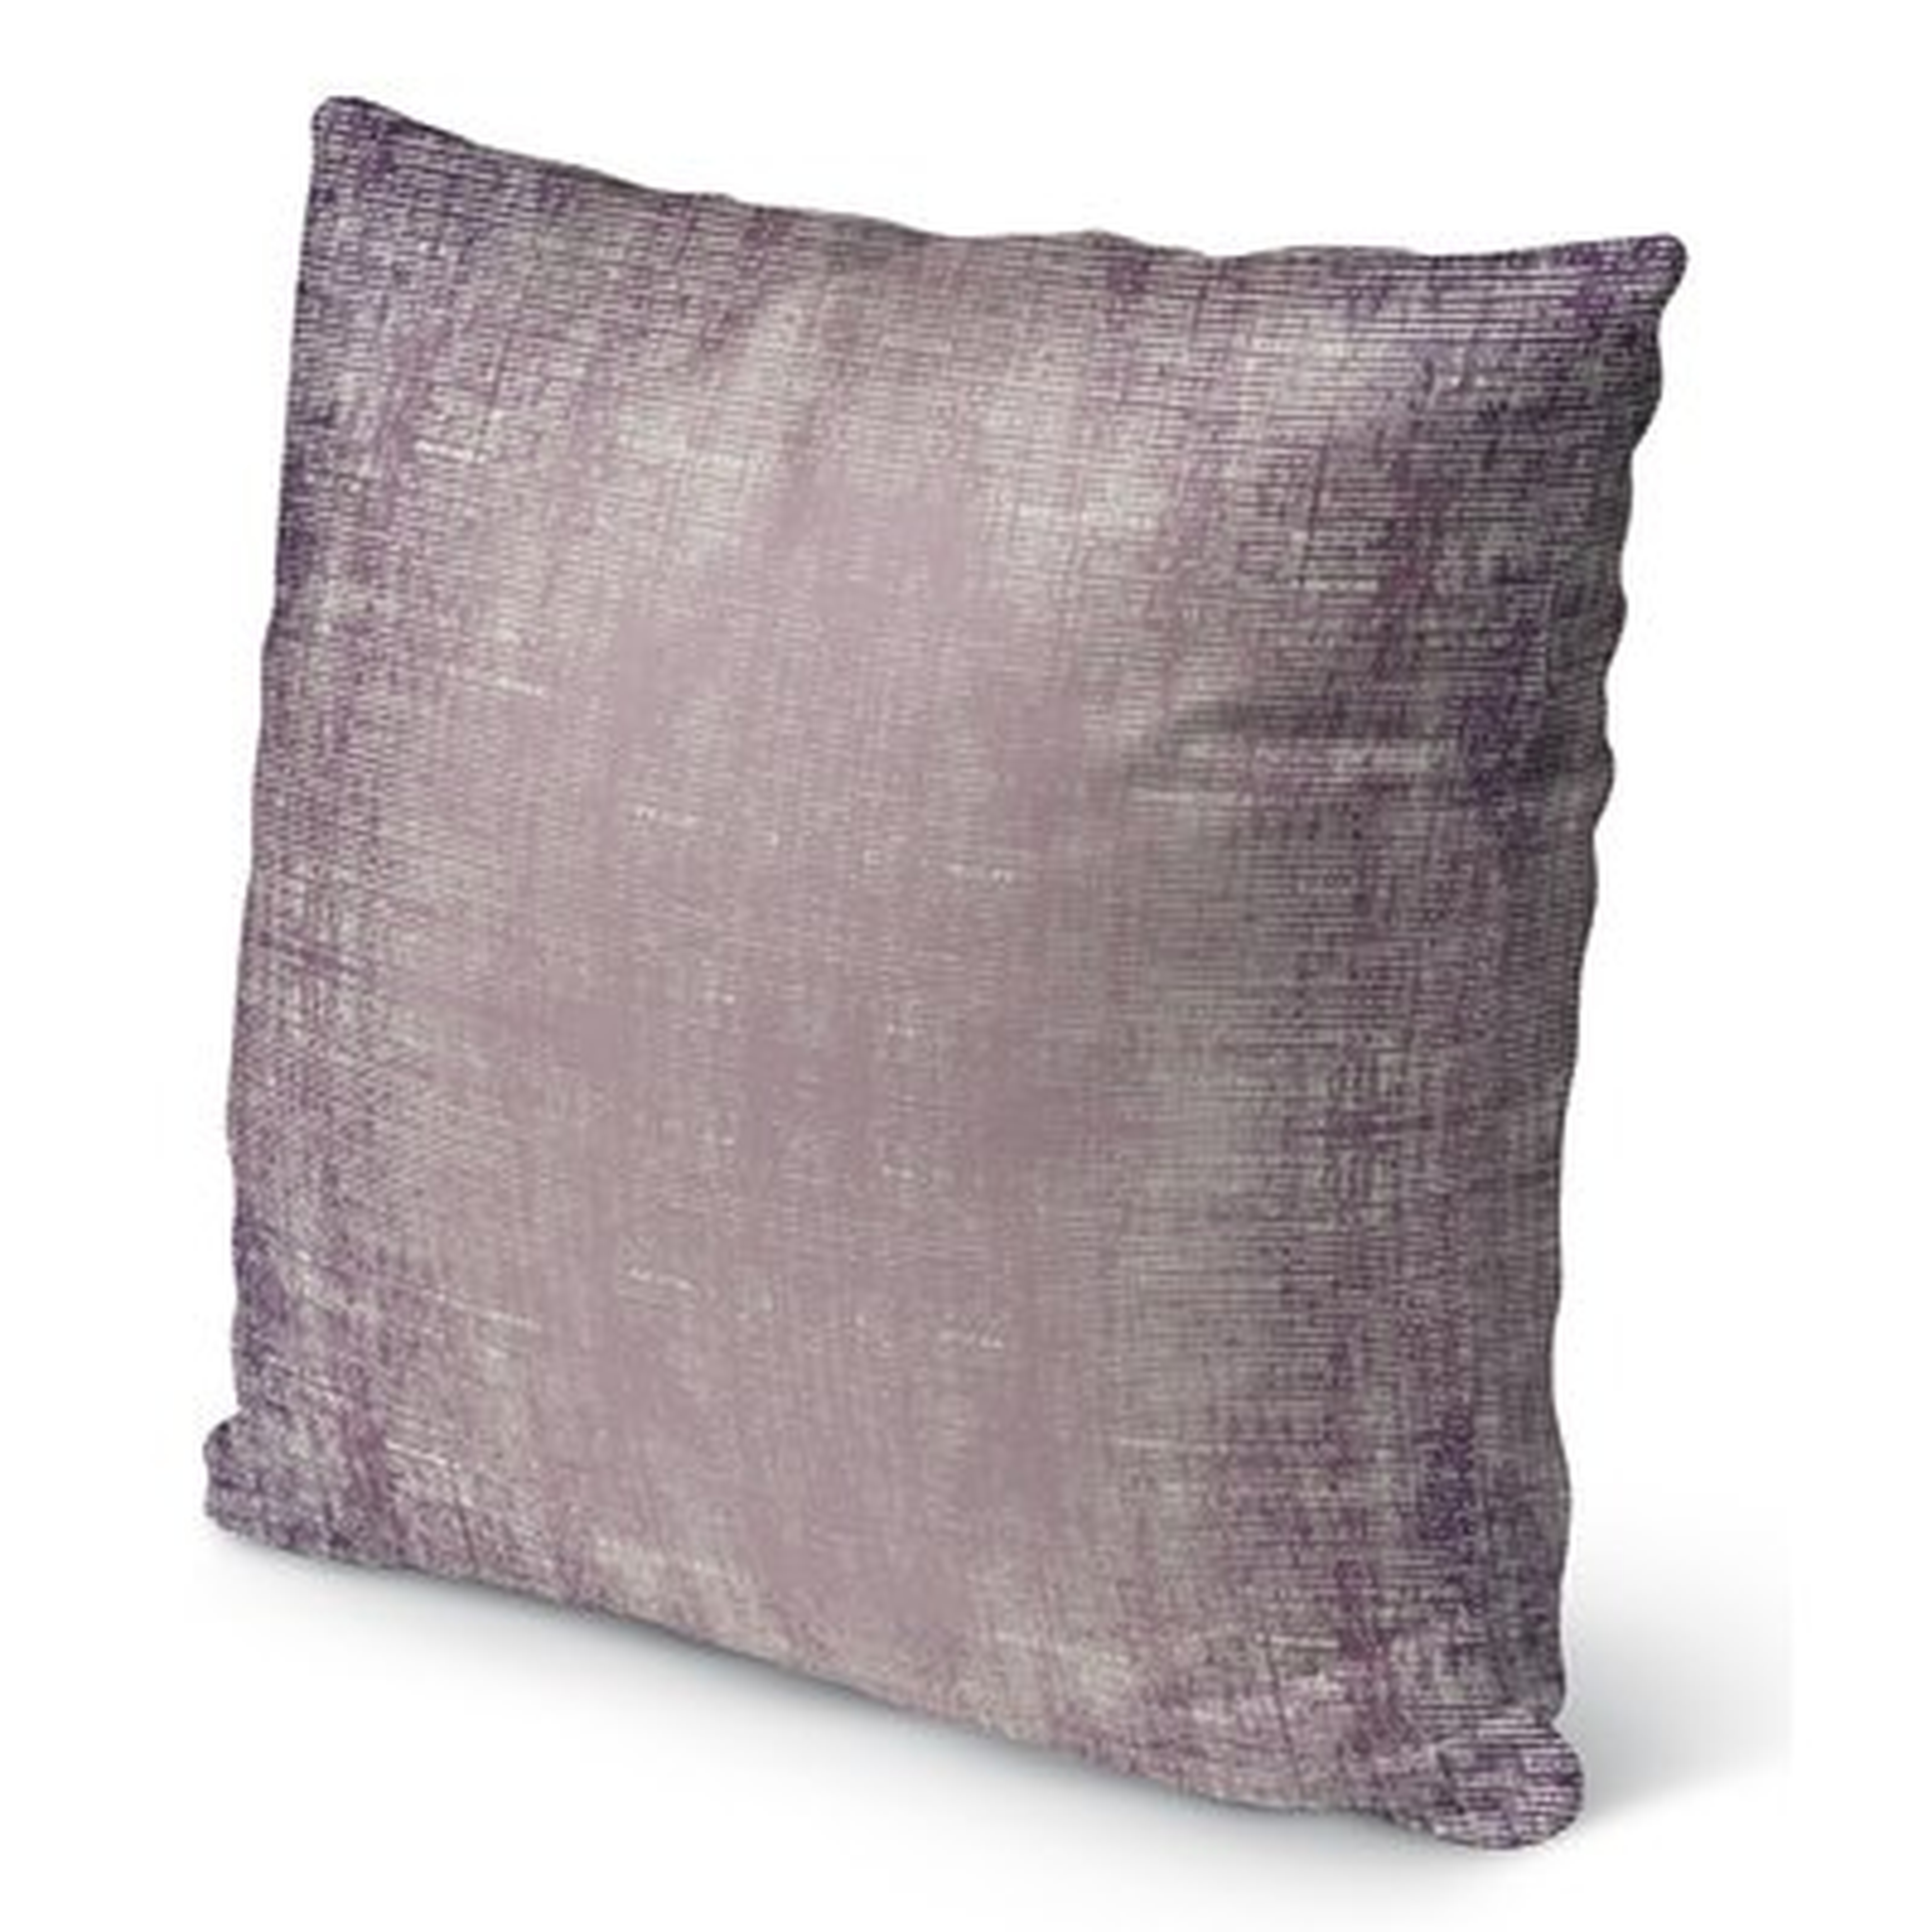 Caya Distressed Indoor/Outdoor Throw Pillow - Wayfair